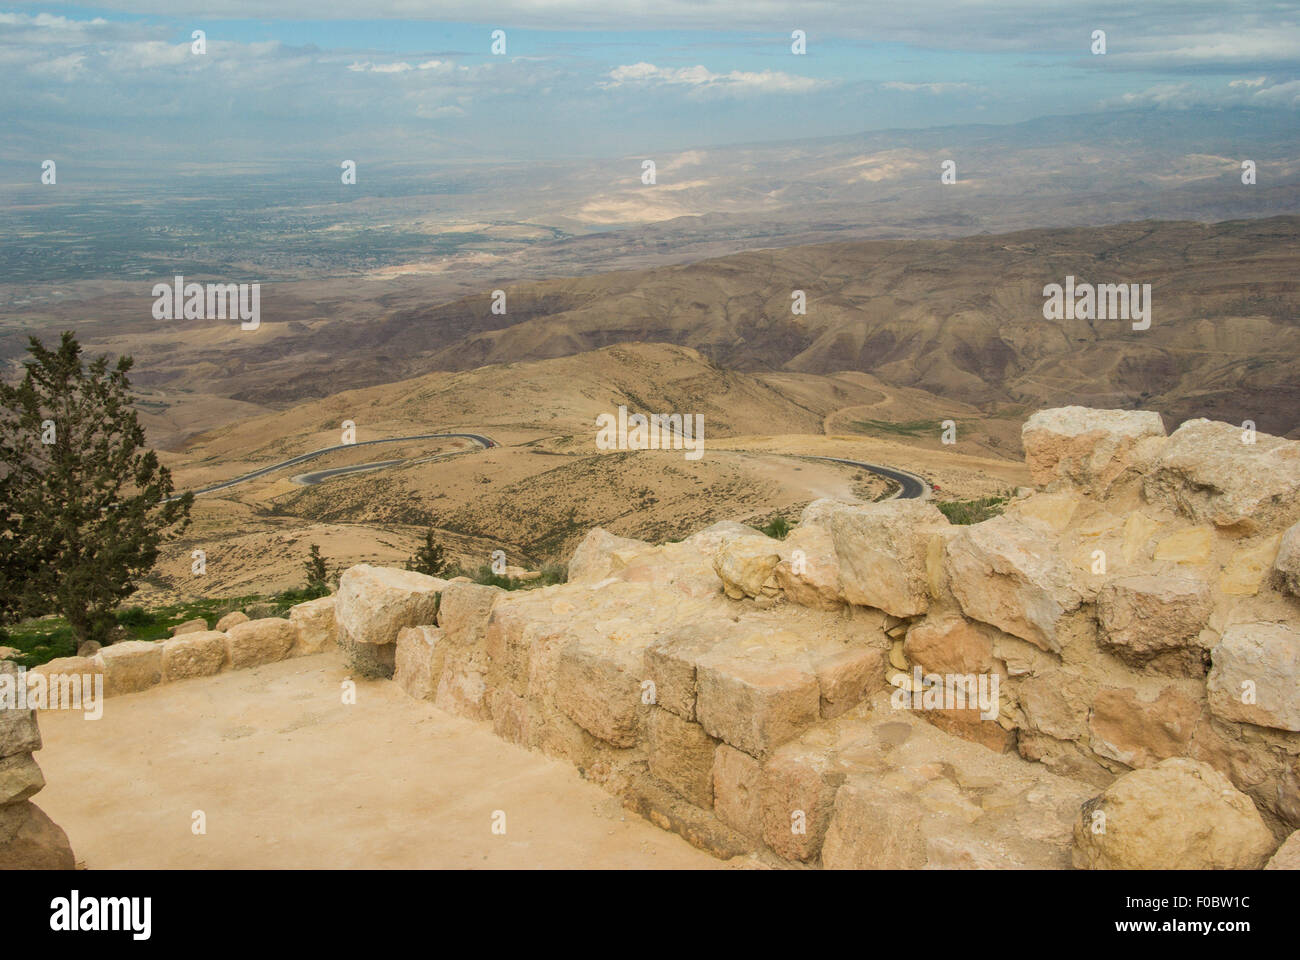 Landscape from Nebo mount, Jordan. Promise land Stock Photo